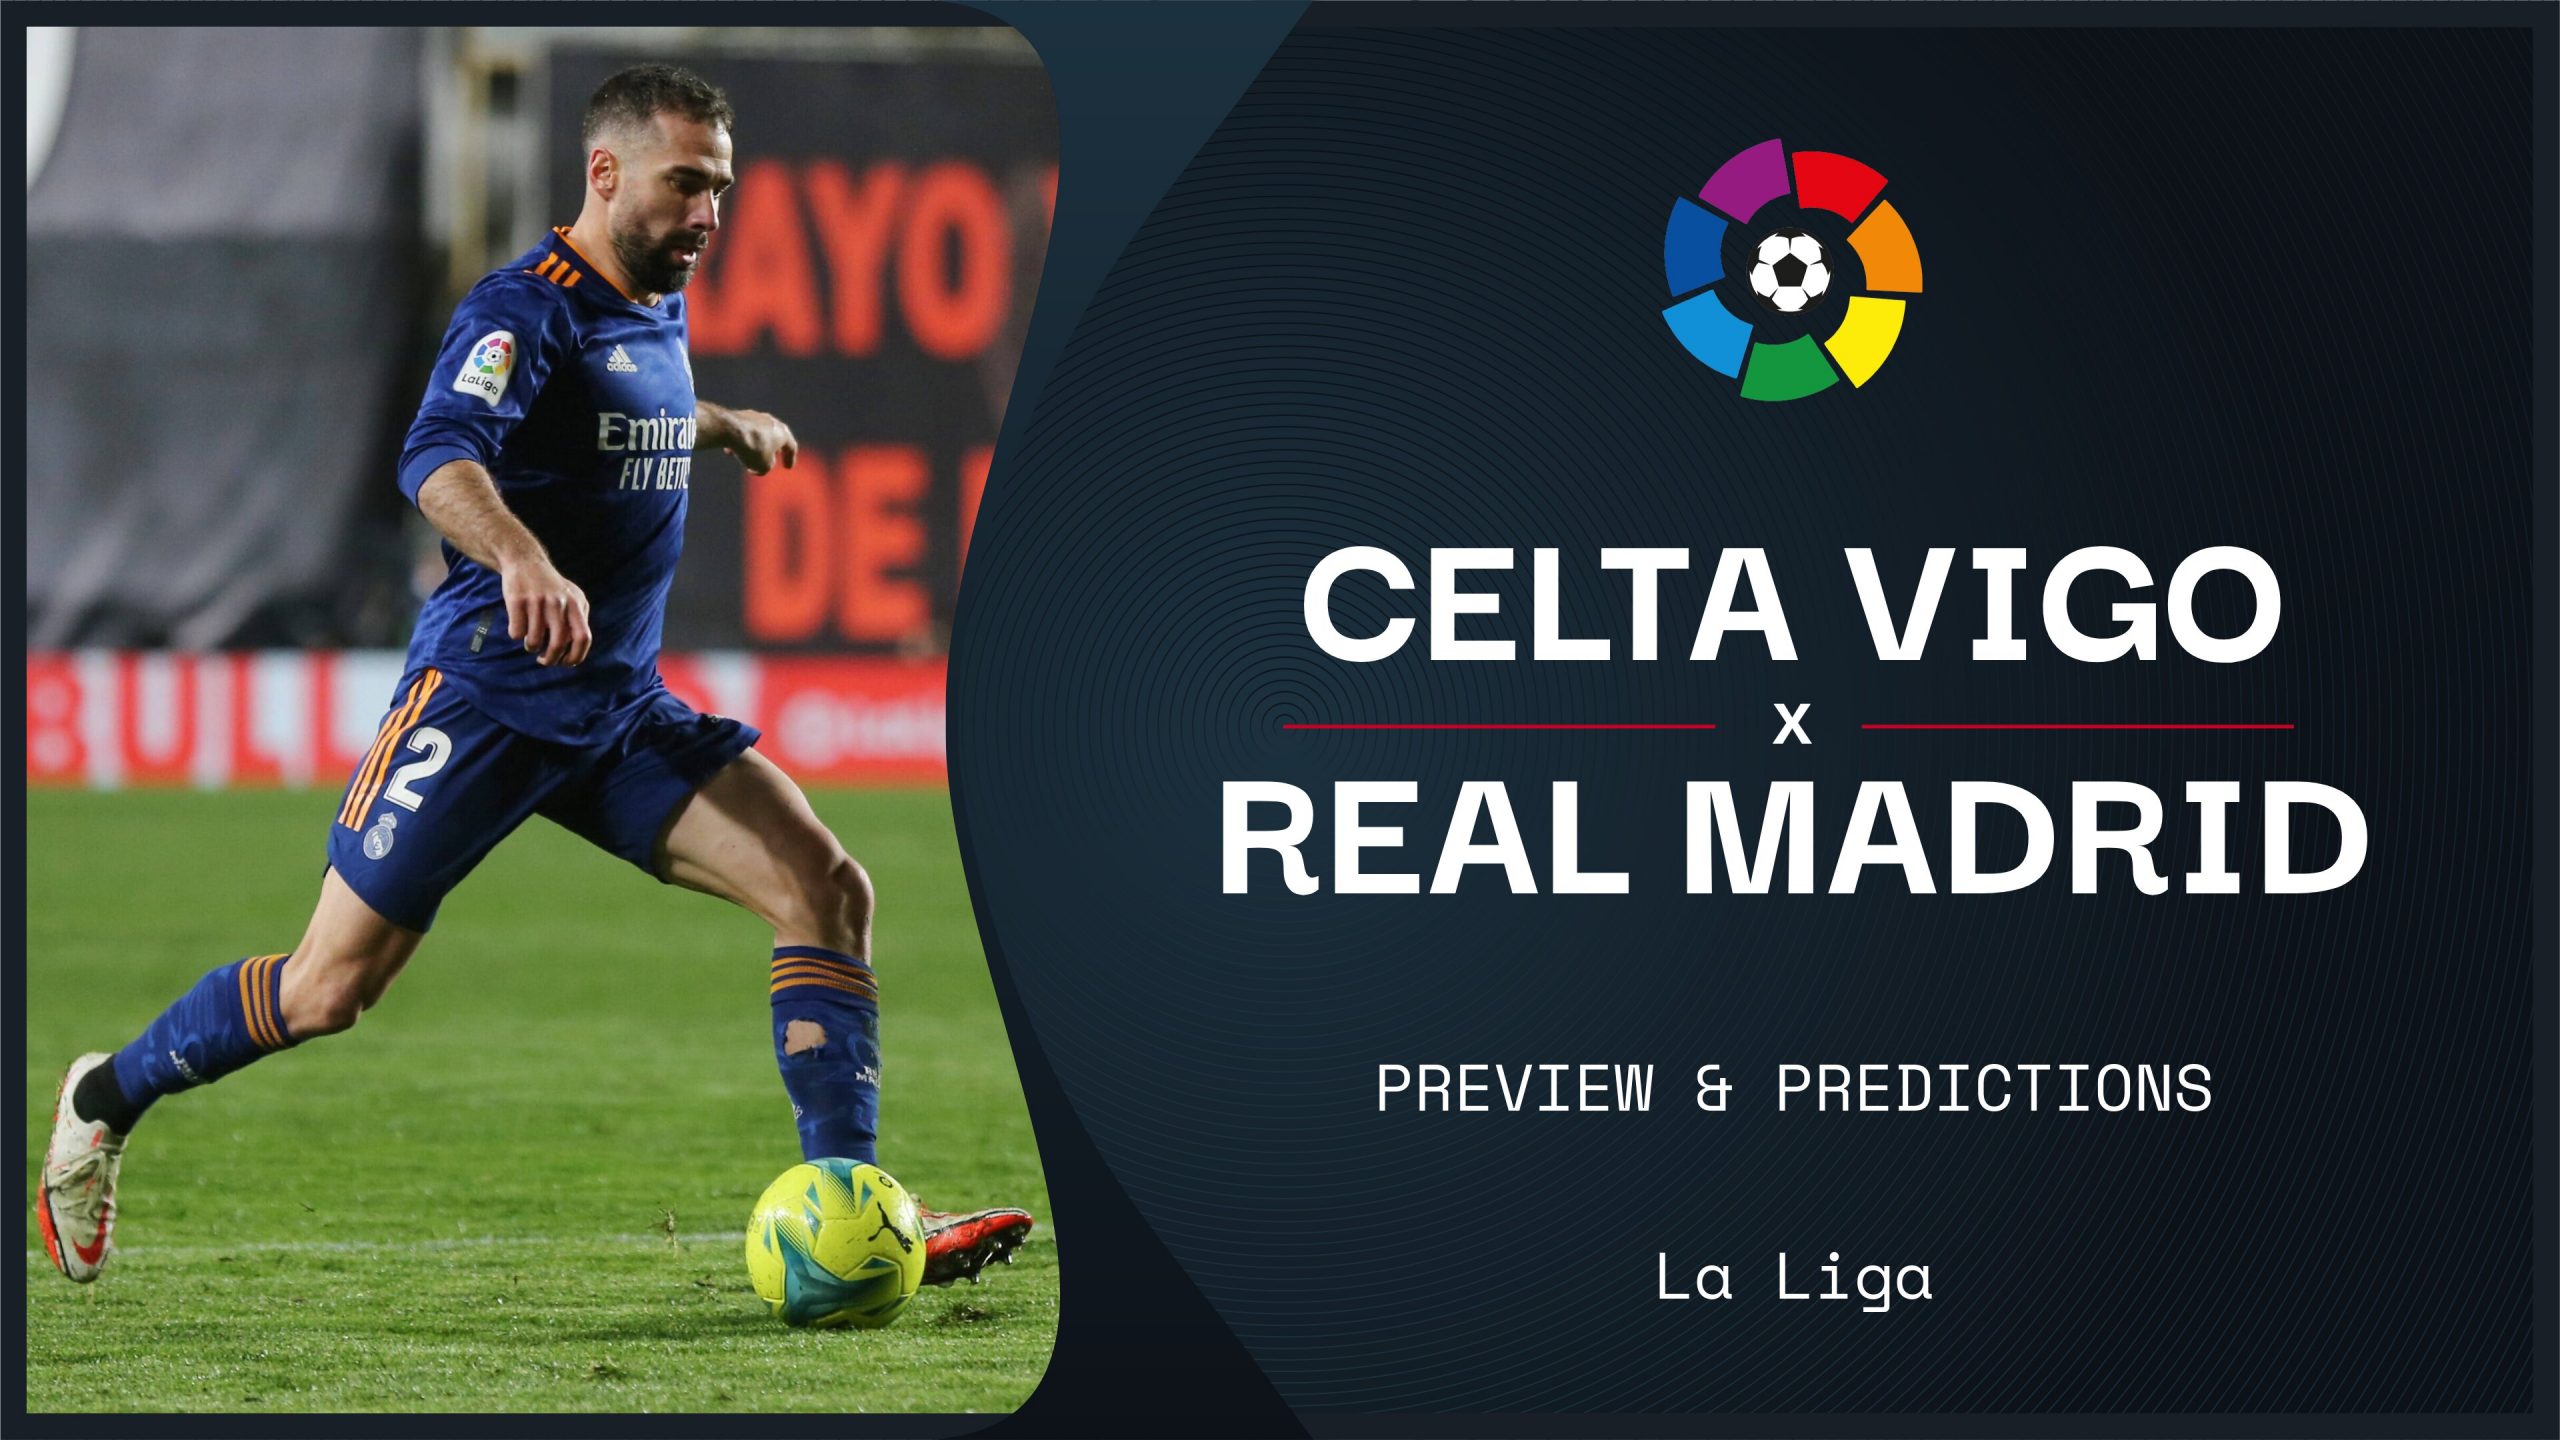 celta viga real 3 Soi kèo tài xỉu Celta Vigo vs Real Madrid 23h30 ngày 02/4/22 - La Liga 